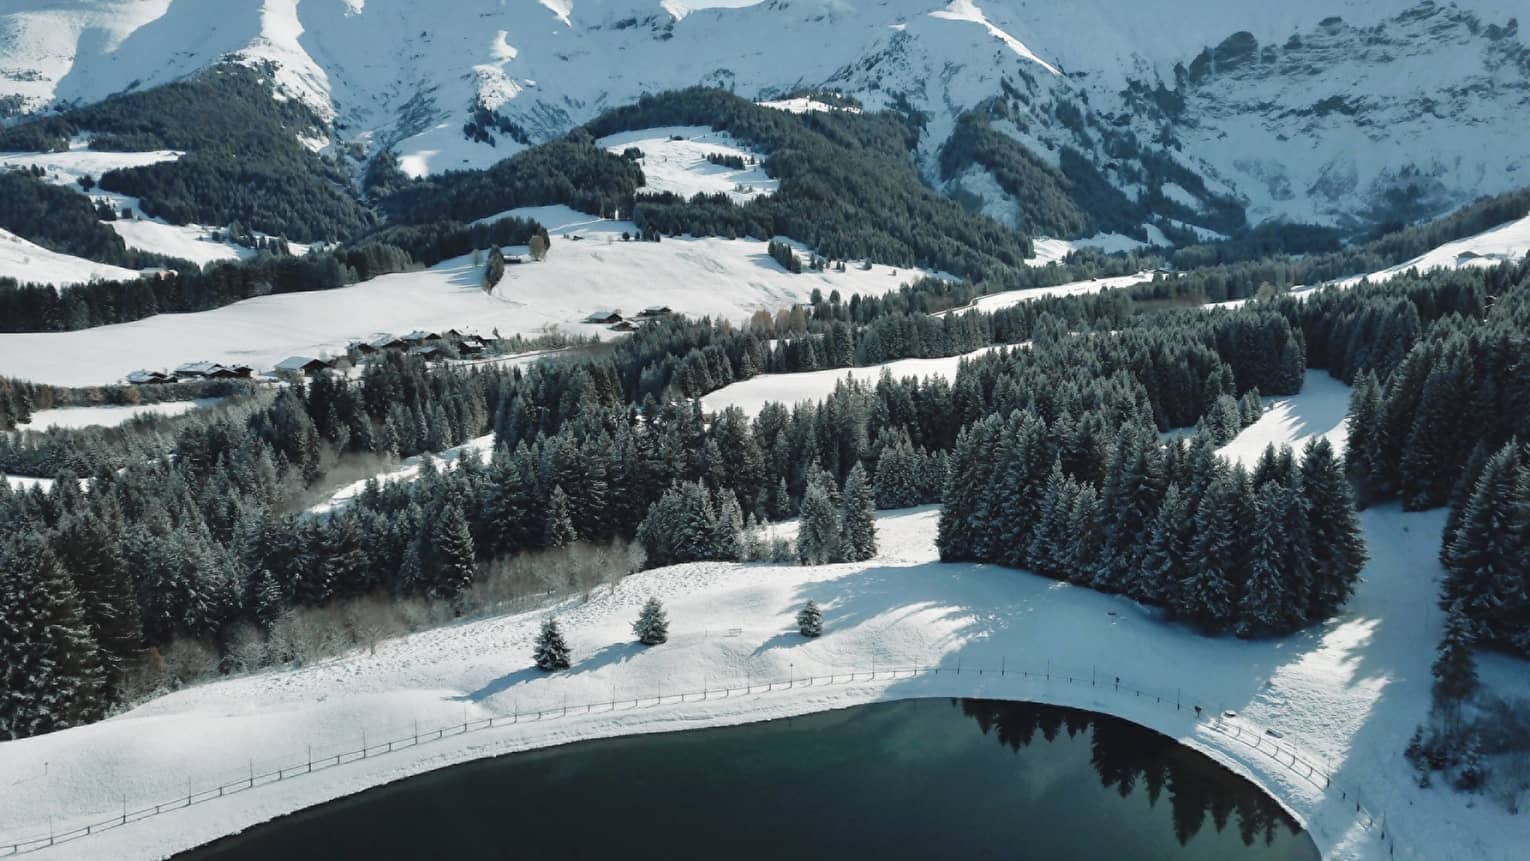 Snowy landscape and mountains surrounding the Lac de Javen